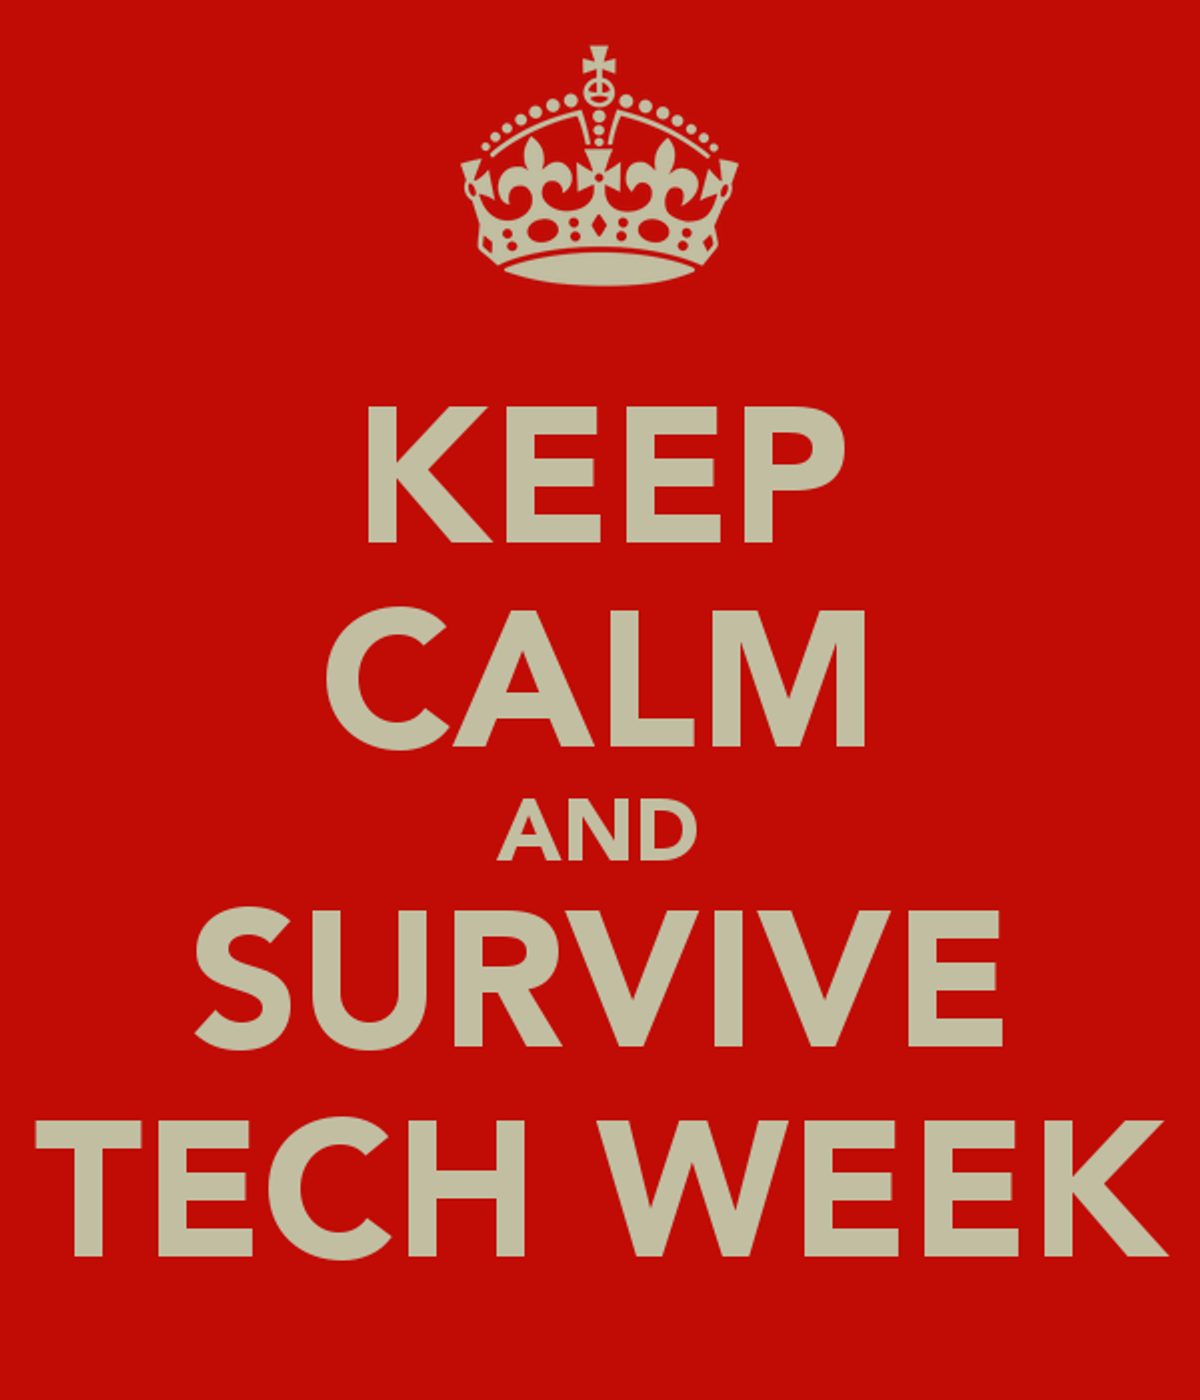 The Stress of Tech Week